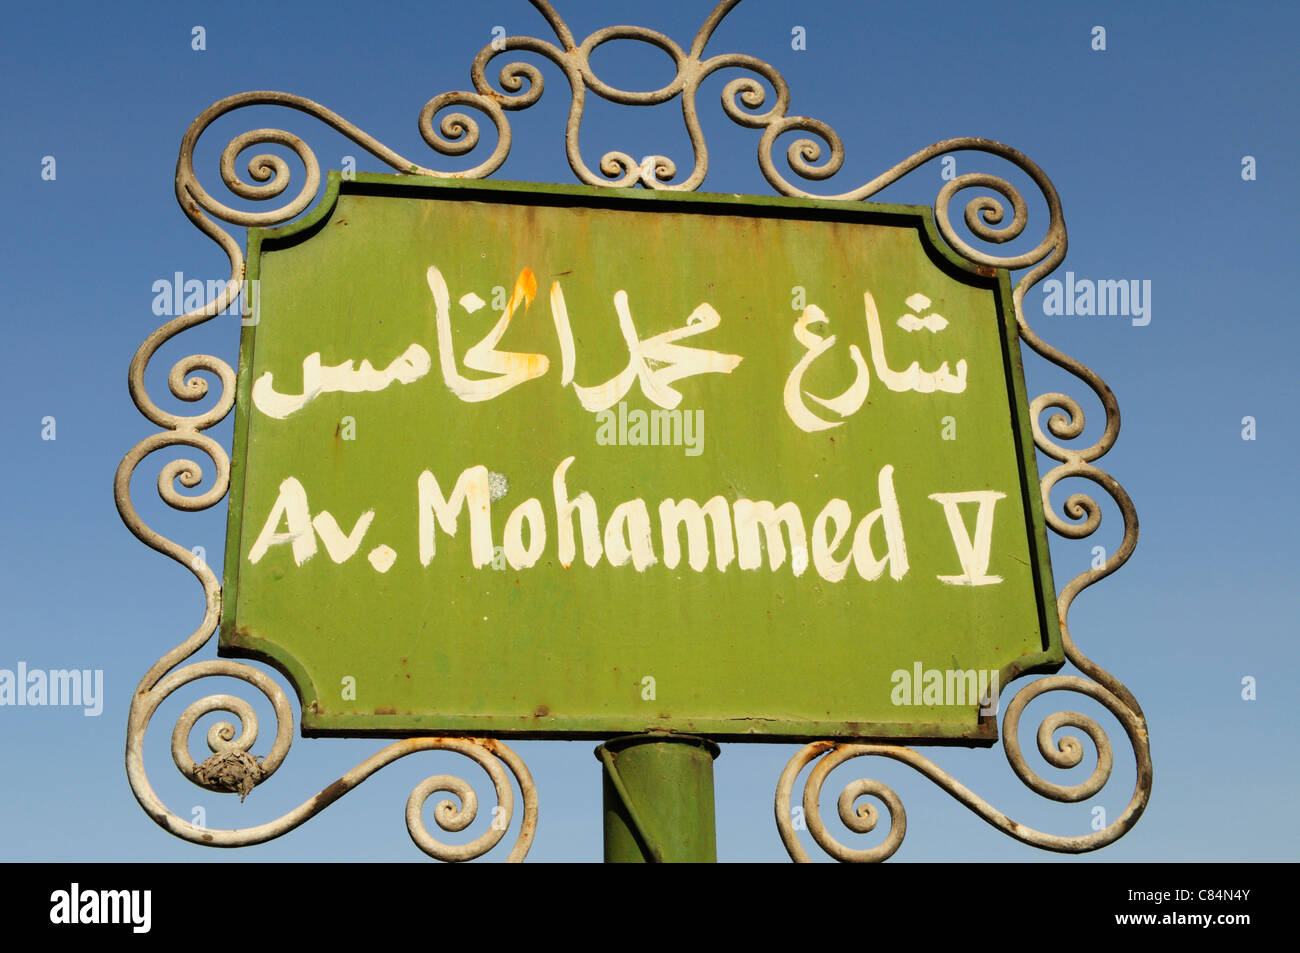 Dual Language Avenue Mohammed V Street Sign, Marrakech, Morocco Stock Photo